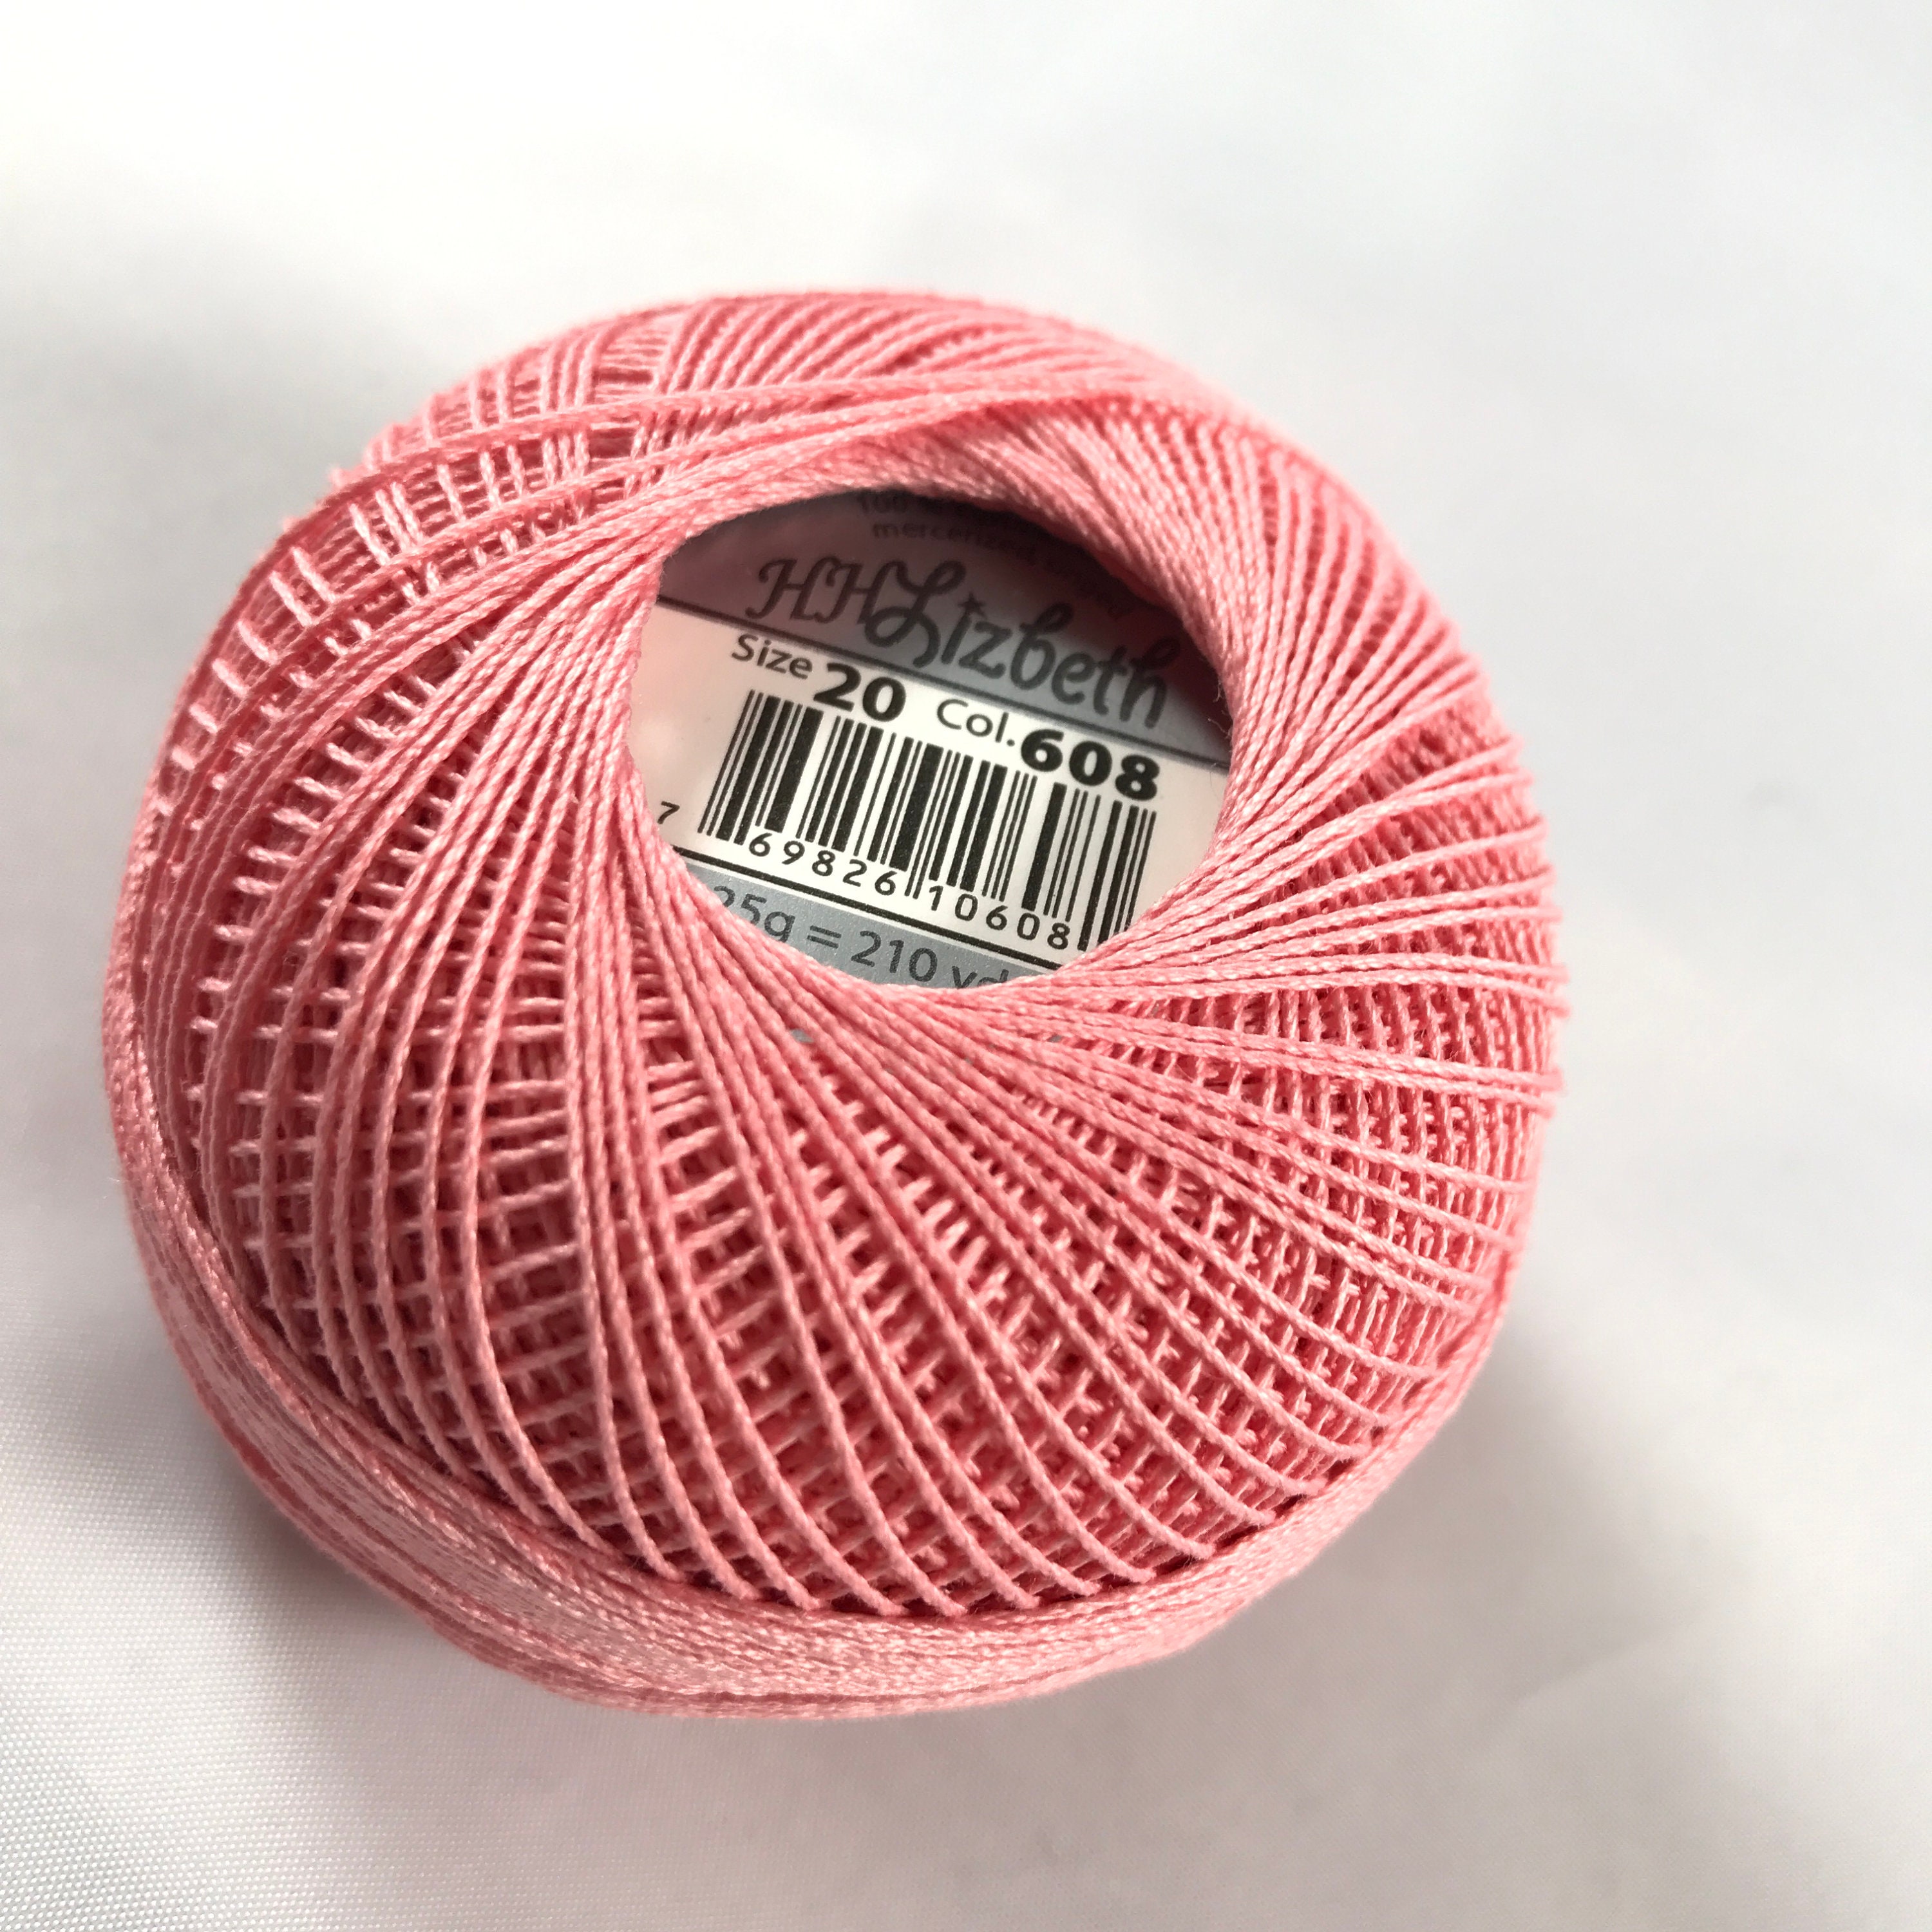 Lizbeth Egyptian Cotton Crochet Thread Size 40 Color 608 Medium Coral Pink 